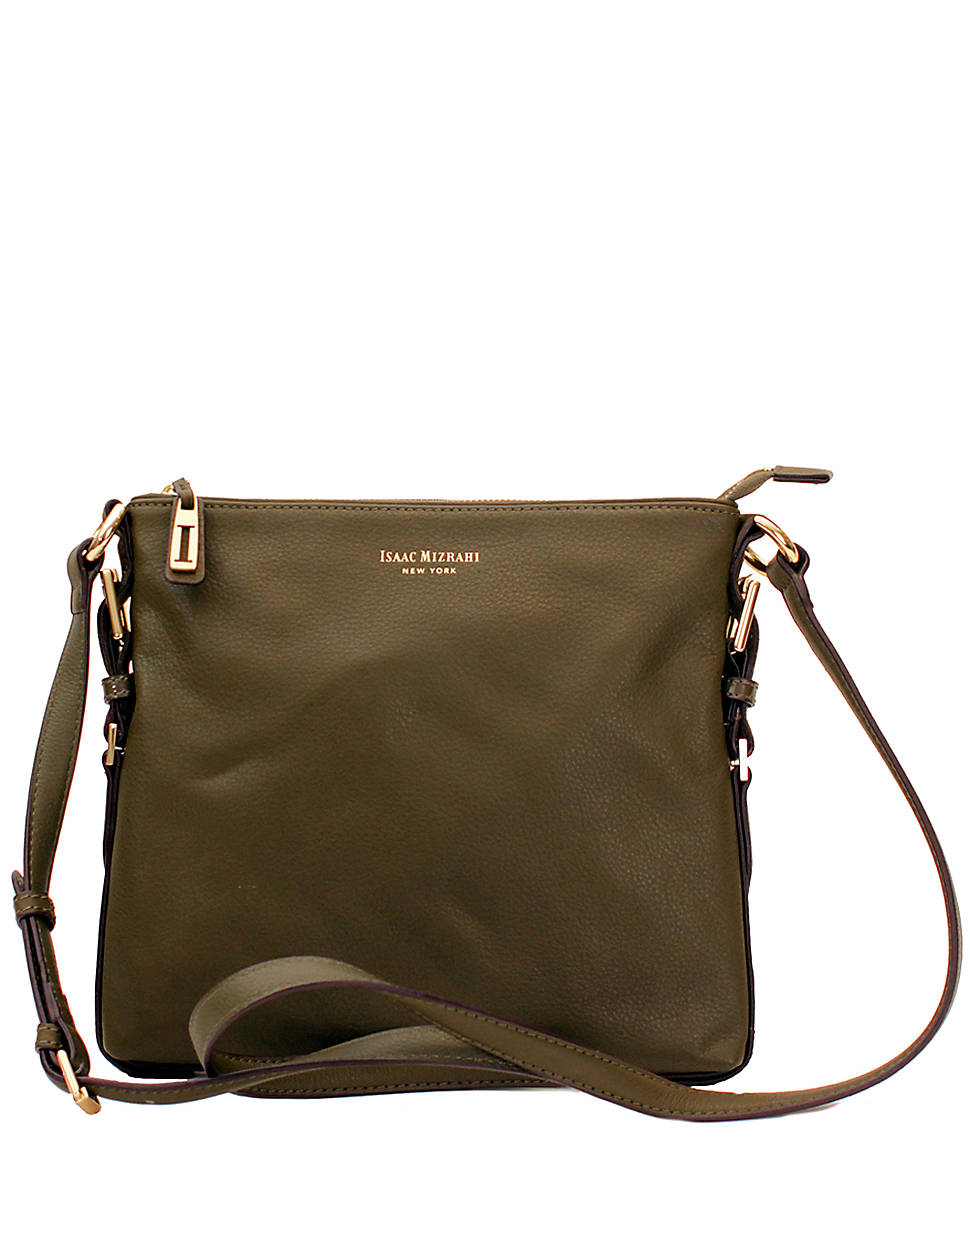 Isaac Mizrahi New York Evalyn Leather Crossbody Bag in Green (olive) | Lyst